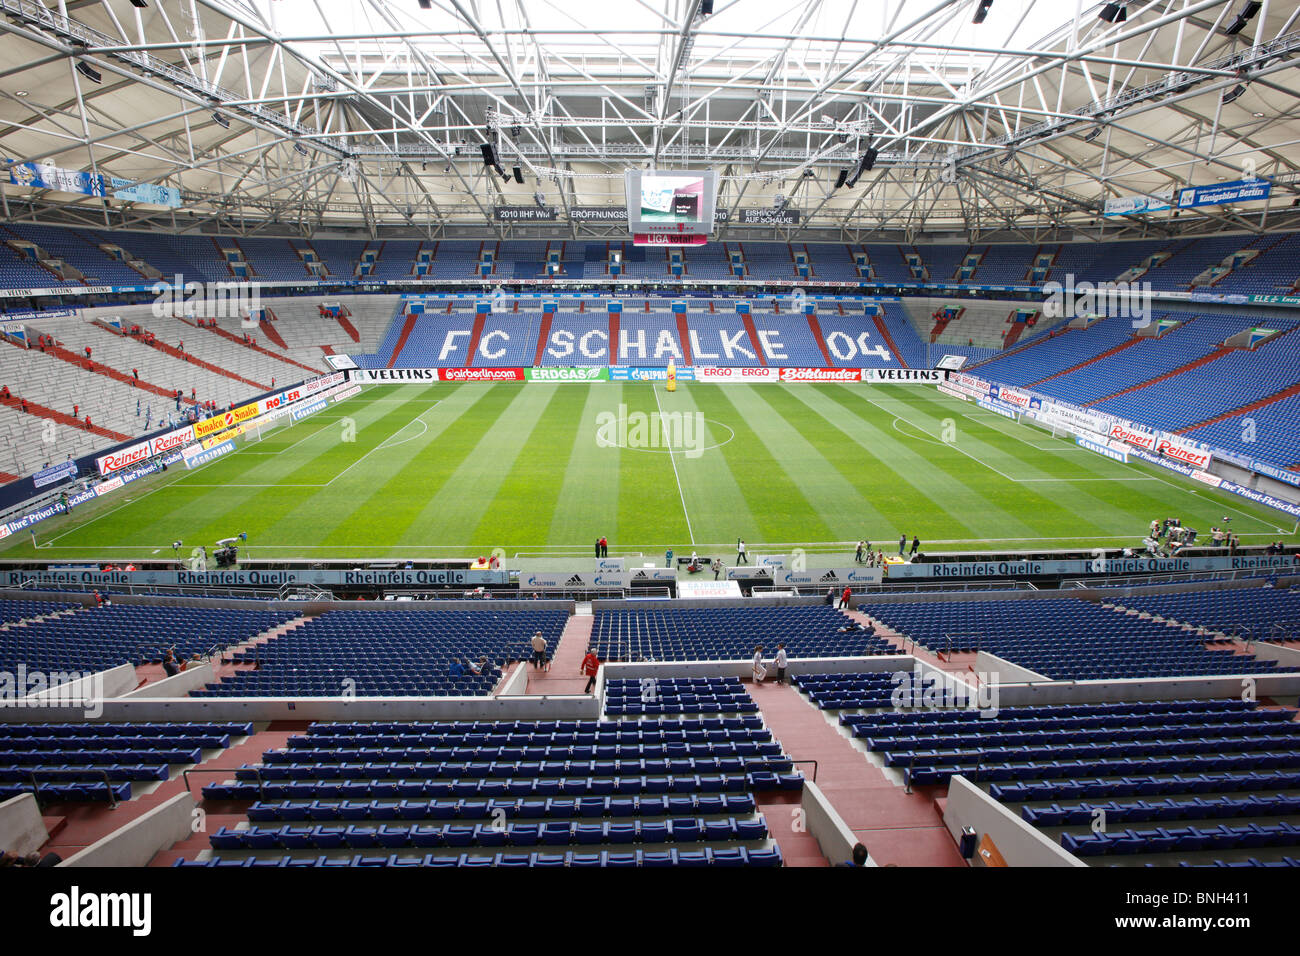 Veltins Areana, big sports stadium, home of German Bundesliga, first division club Schalke 04, Gelsenkrichen, Germany. Stock Photo